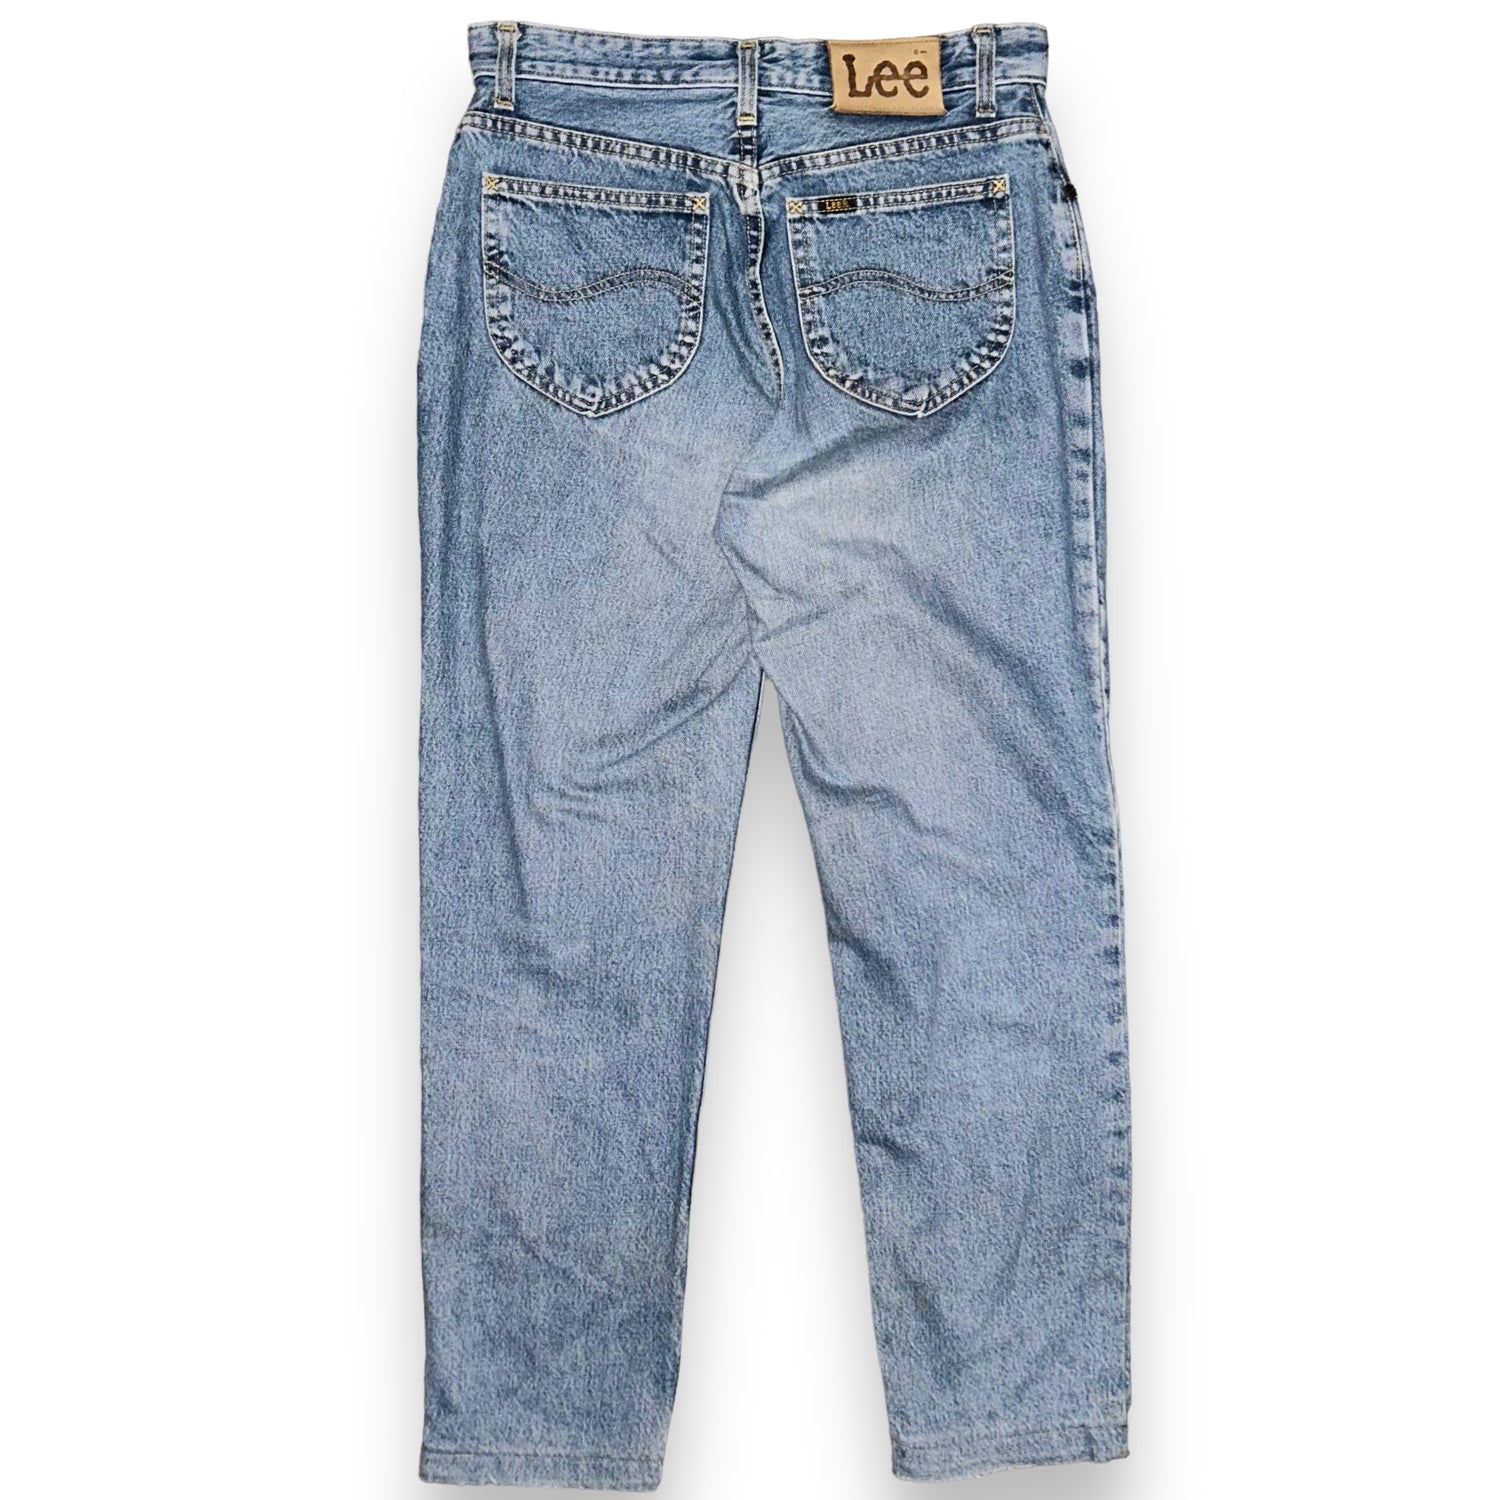 Jeans Lee Vintage  (30 USA  S)